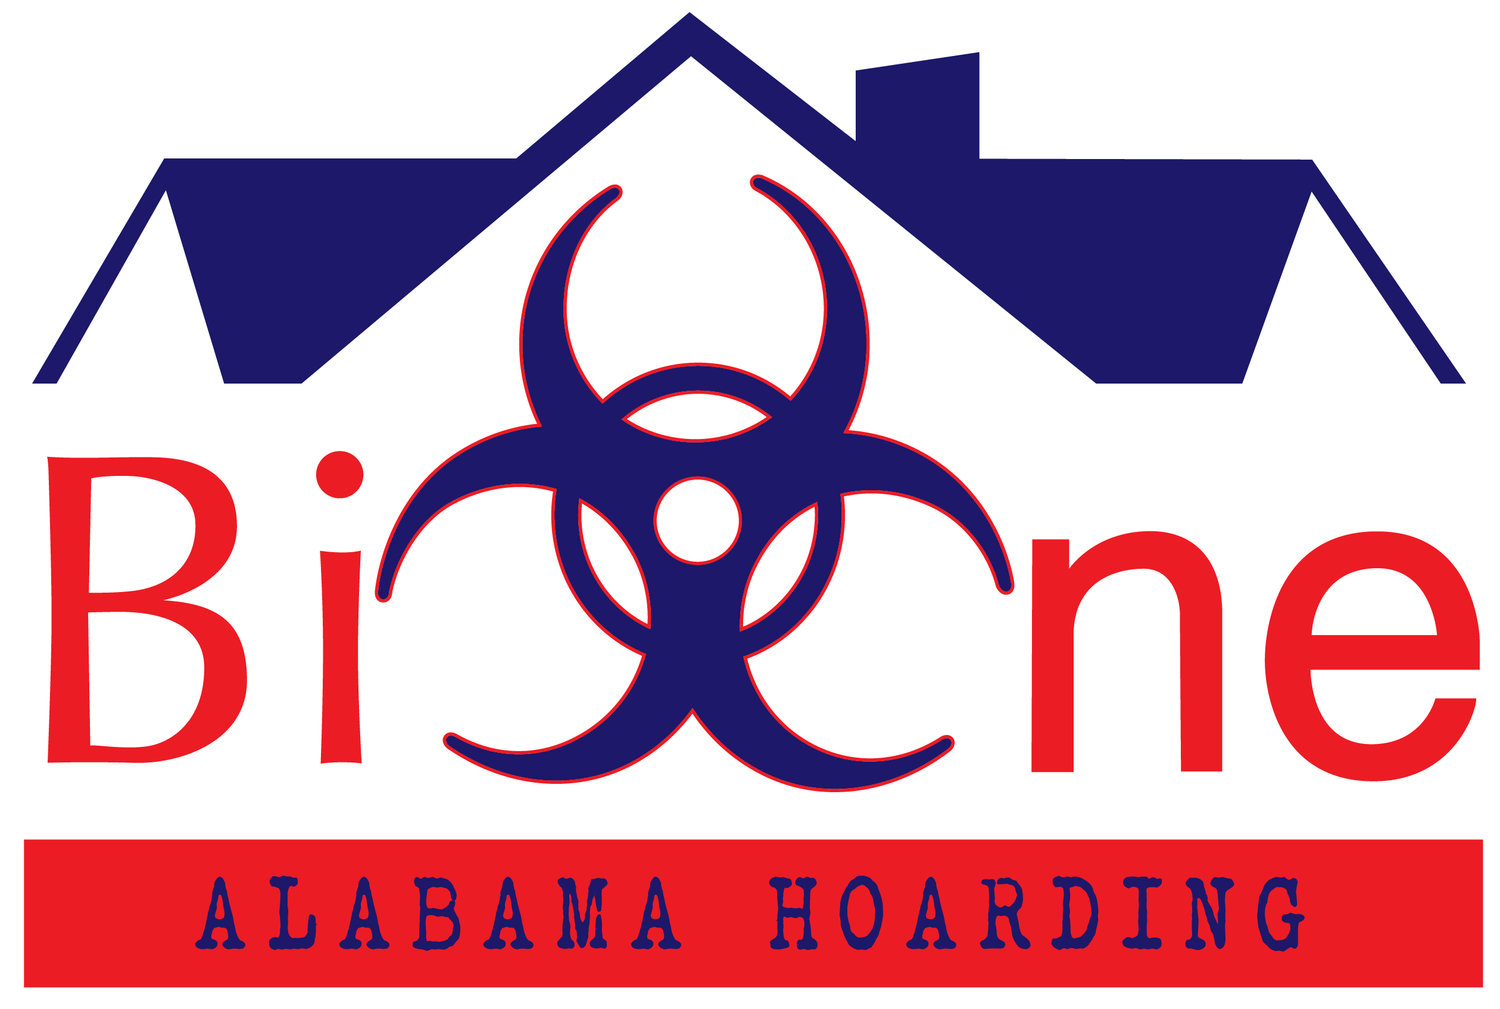 Alabama Hoarding